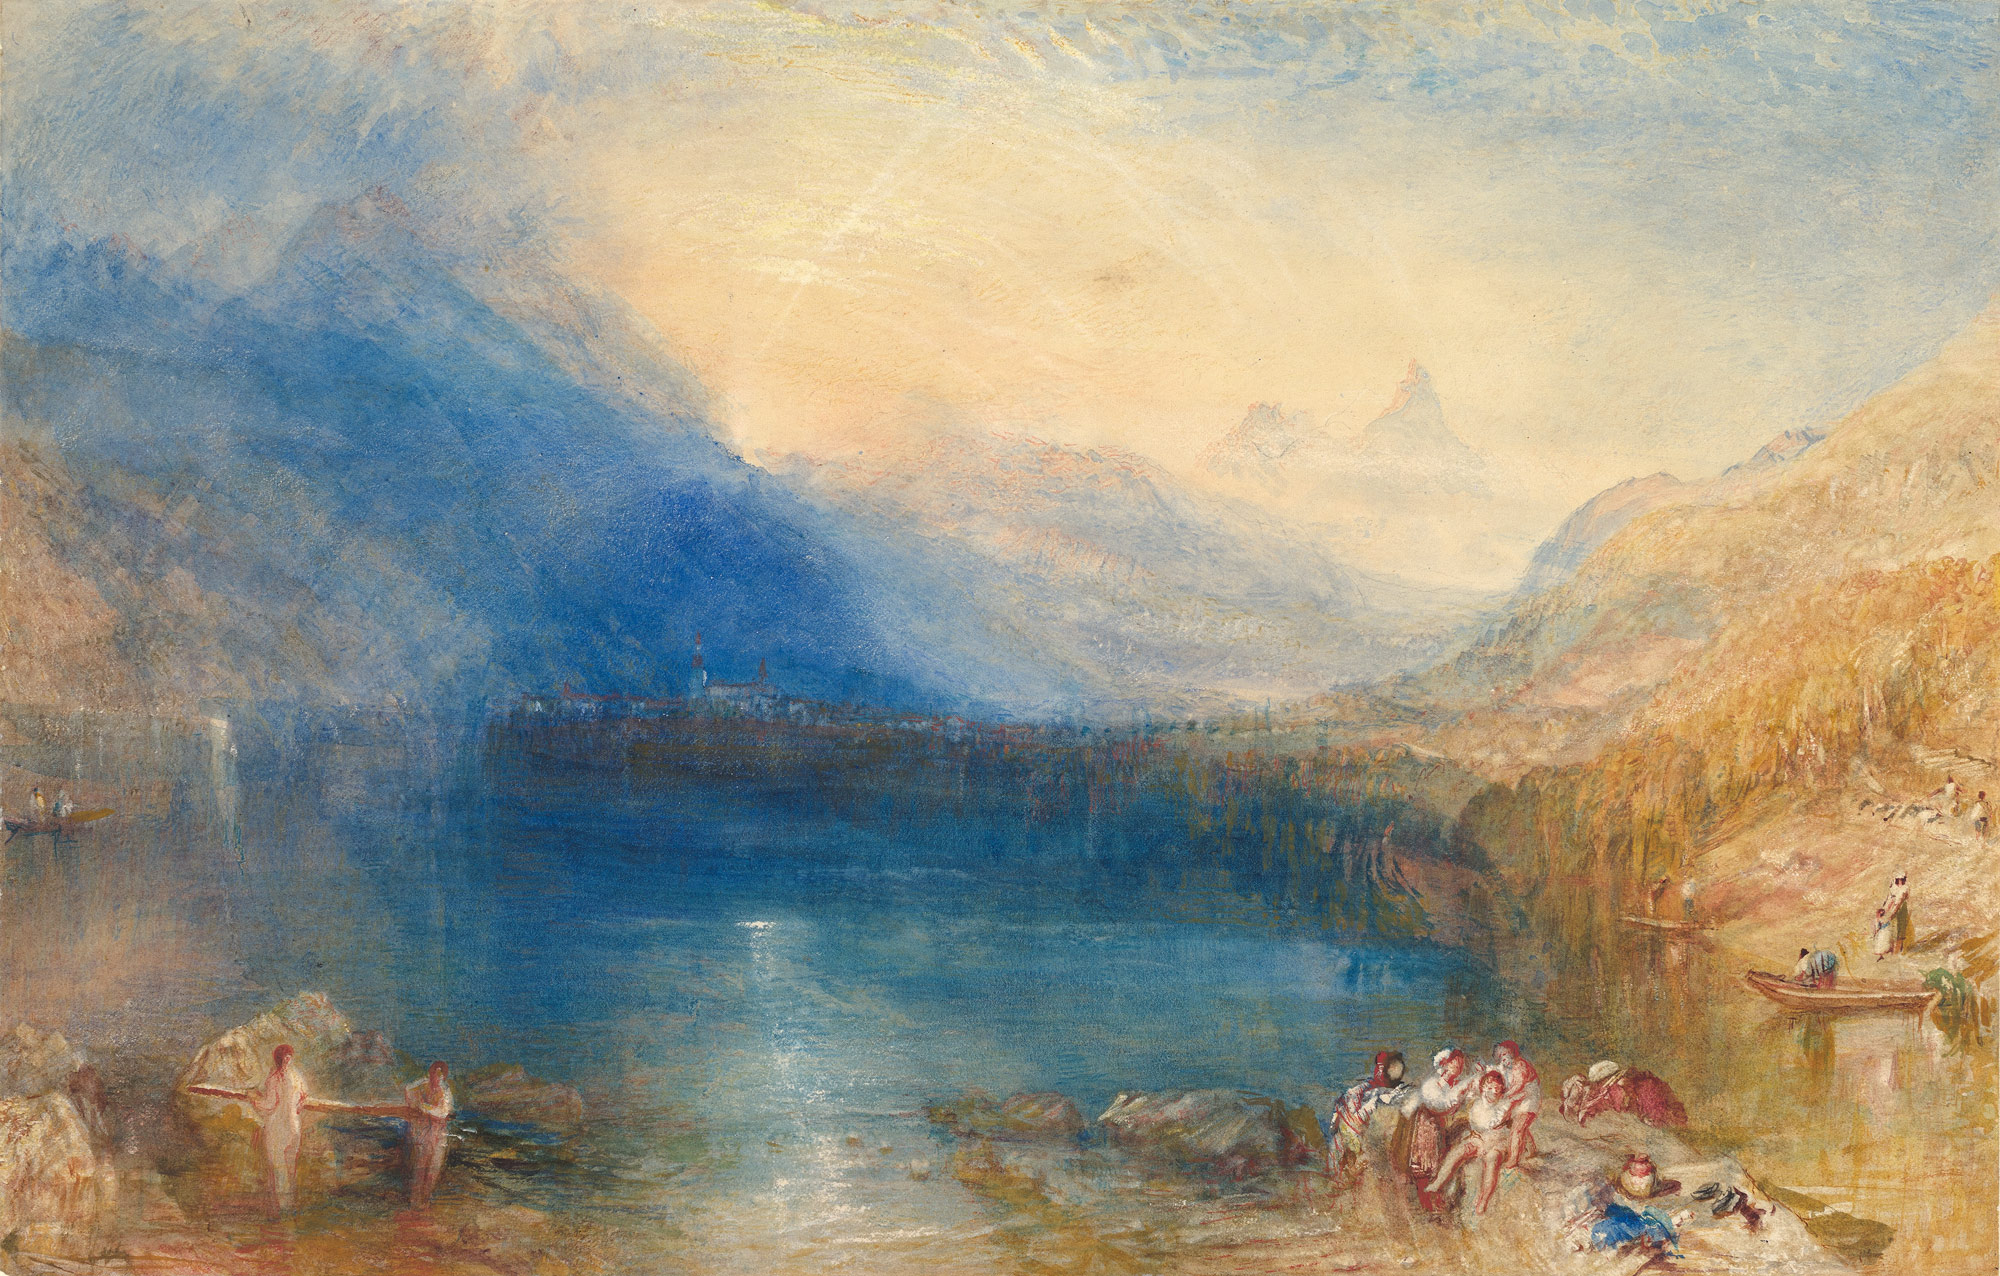 Het Meer van Zug by Joseph Mallord William Turner - 1843 - 29,8 x 46,73 cm 